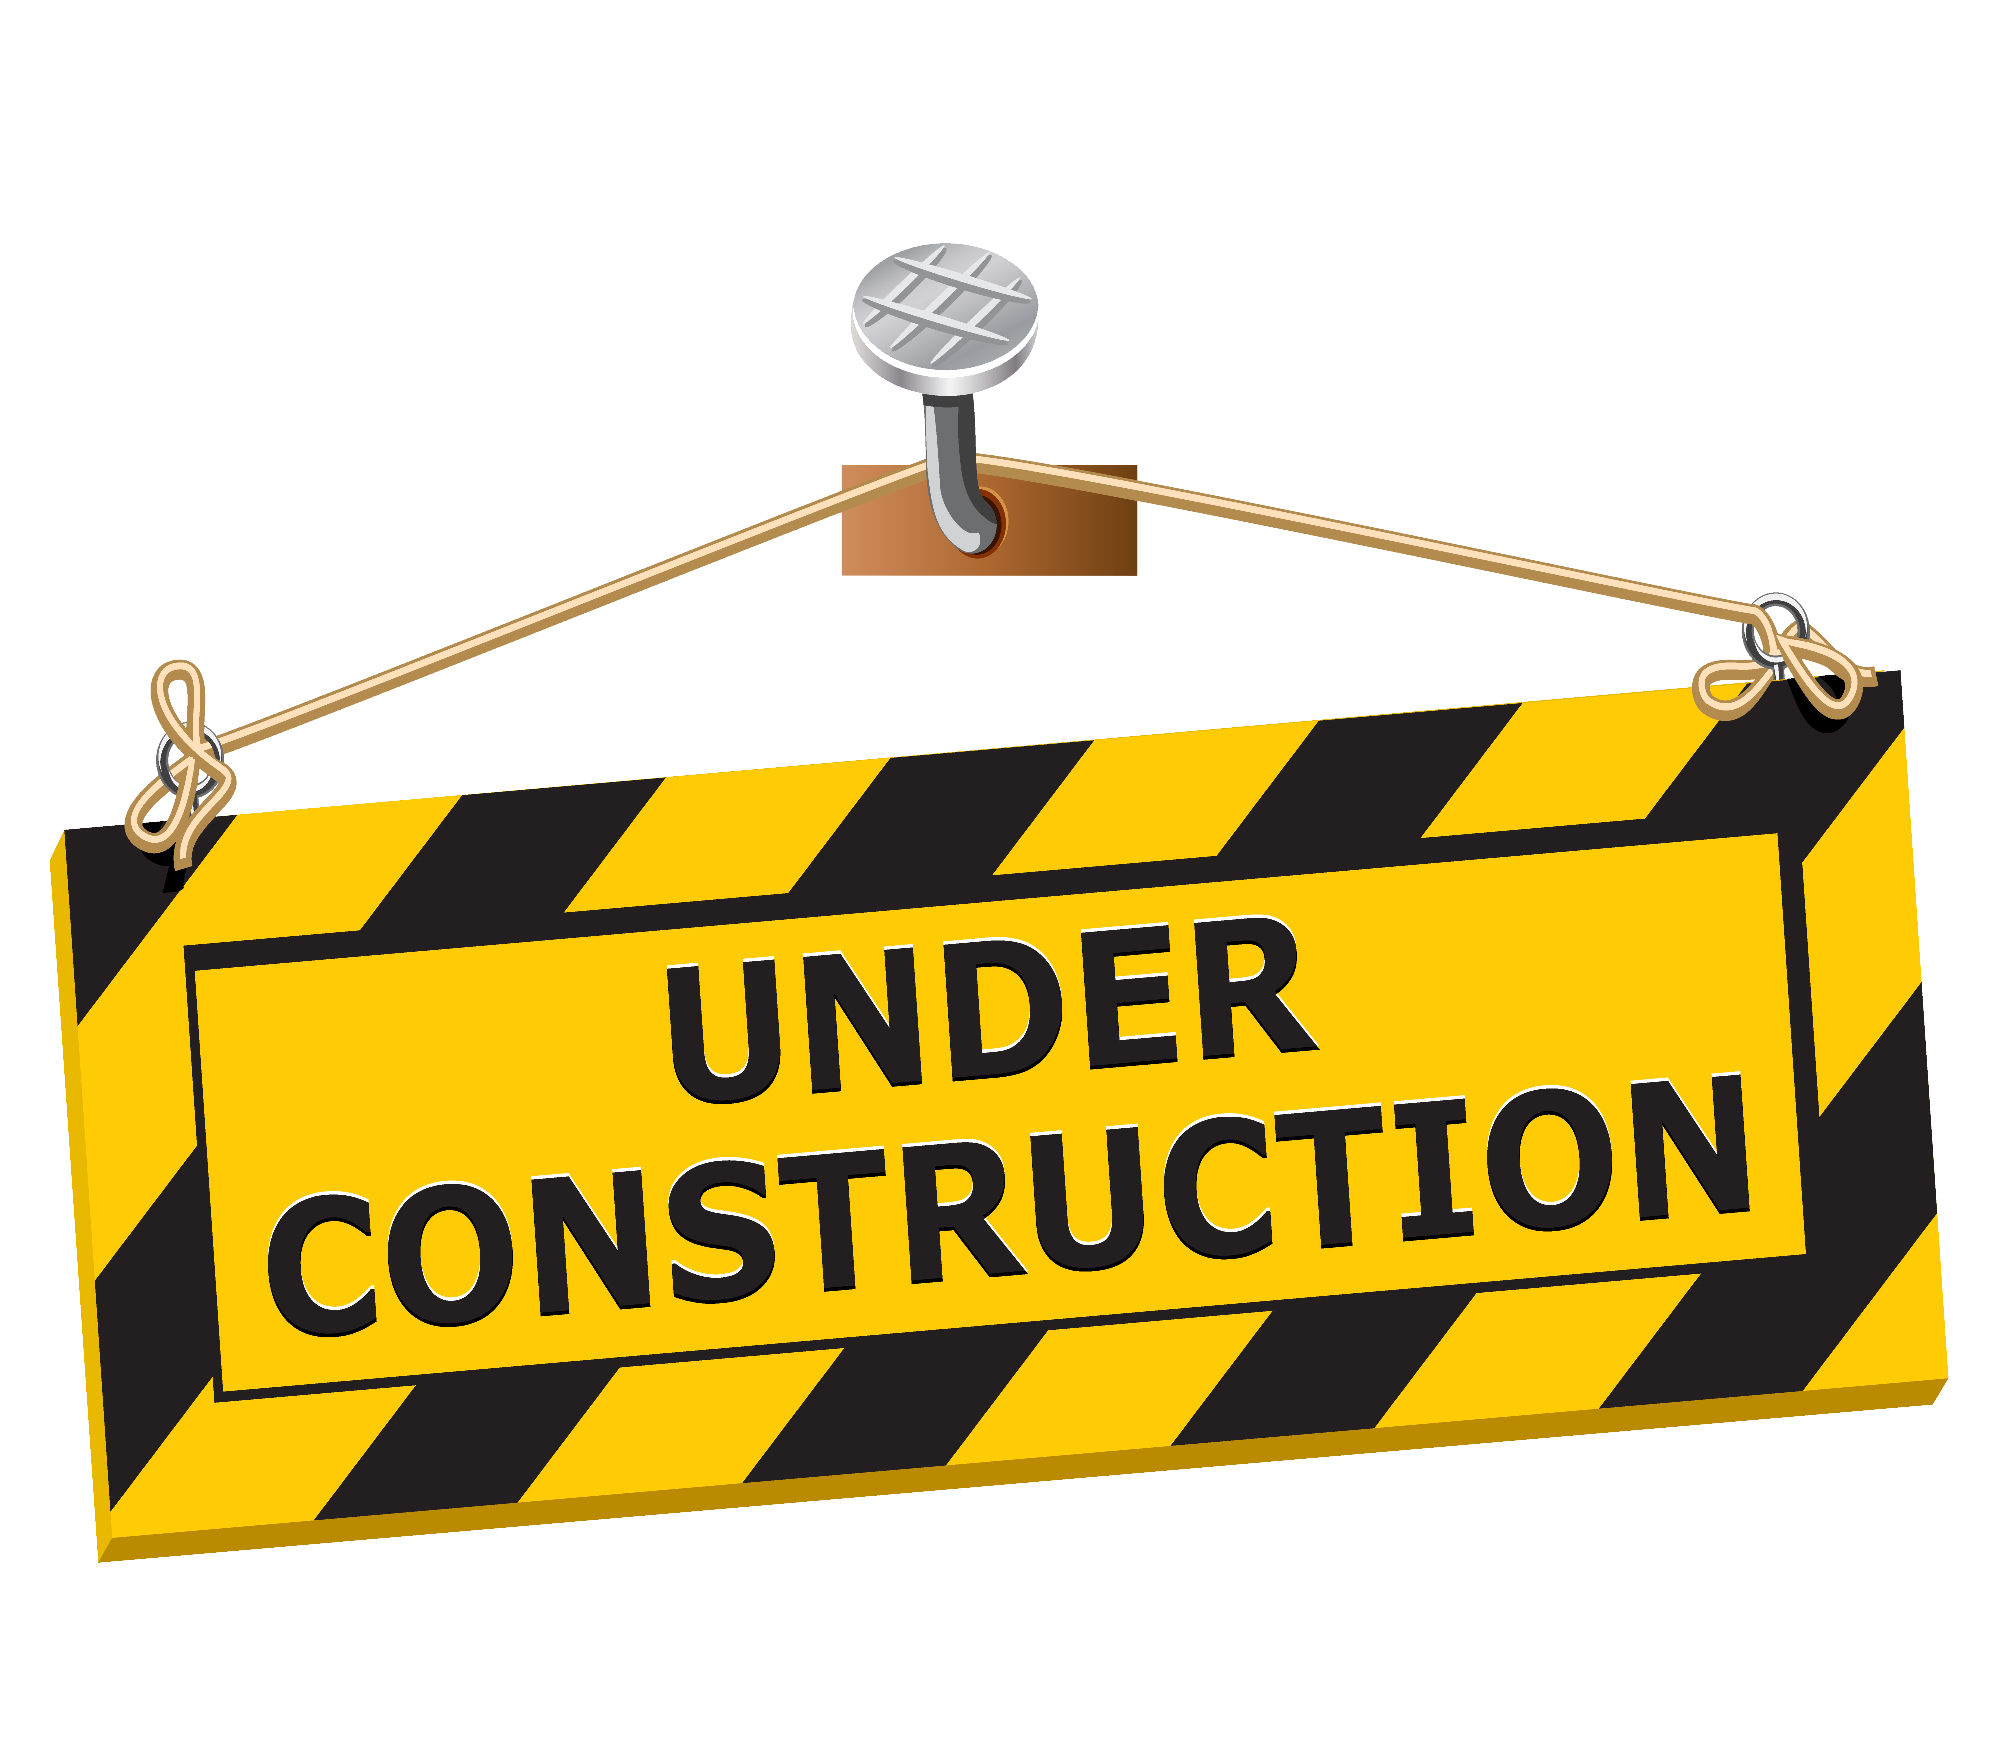 Under Construction PNG Image File